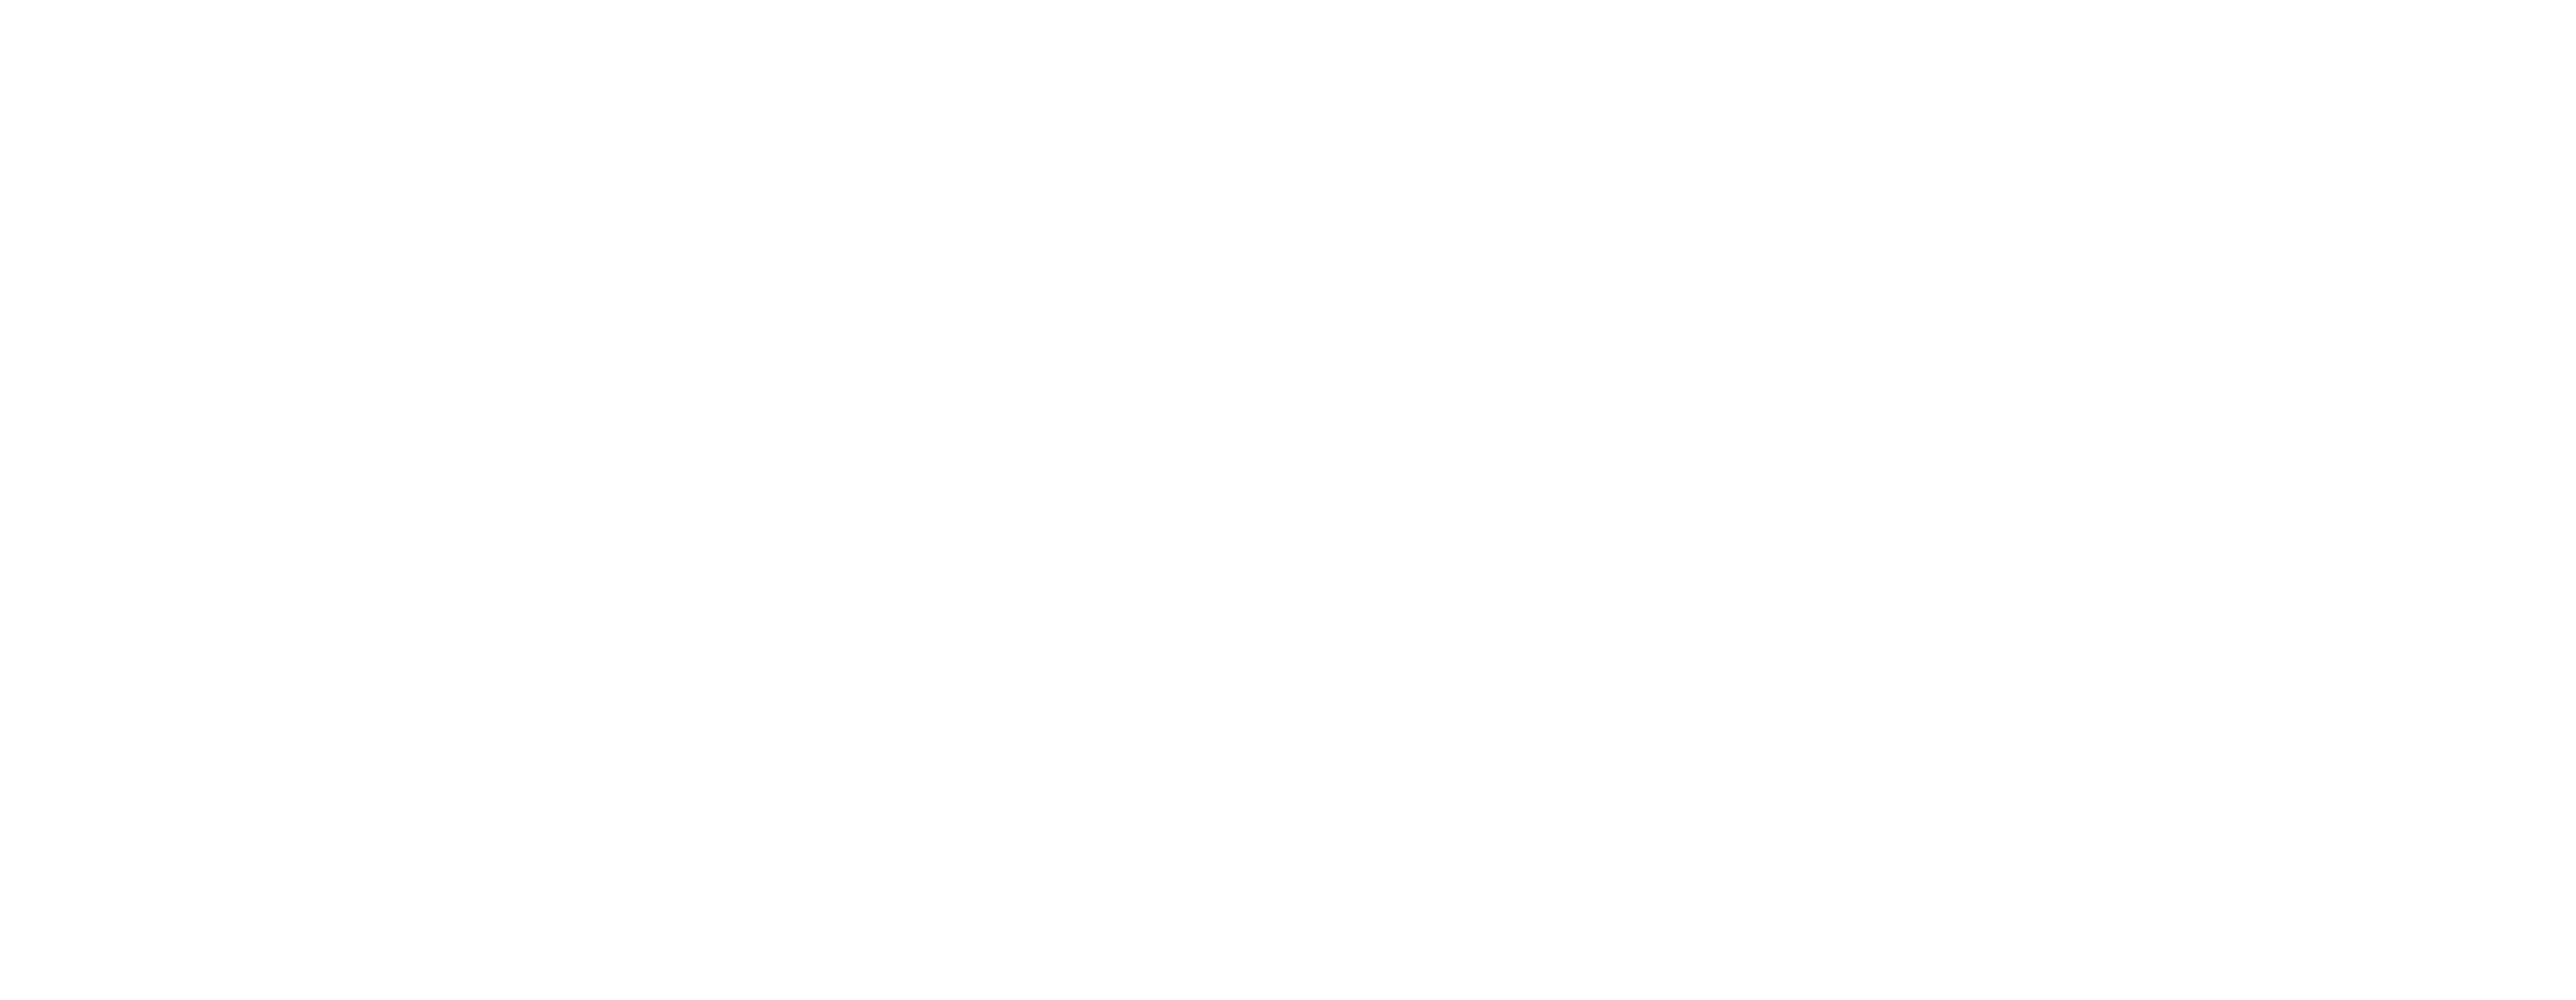 The Beaches Hotel logo